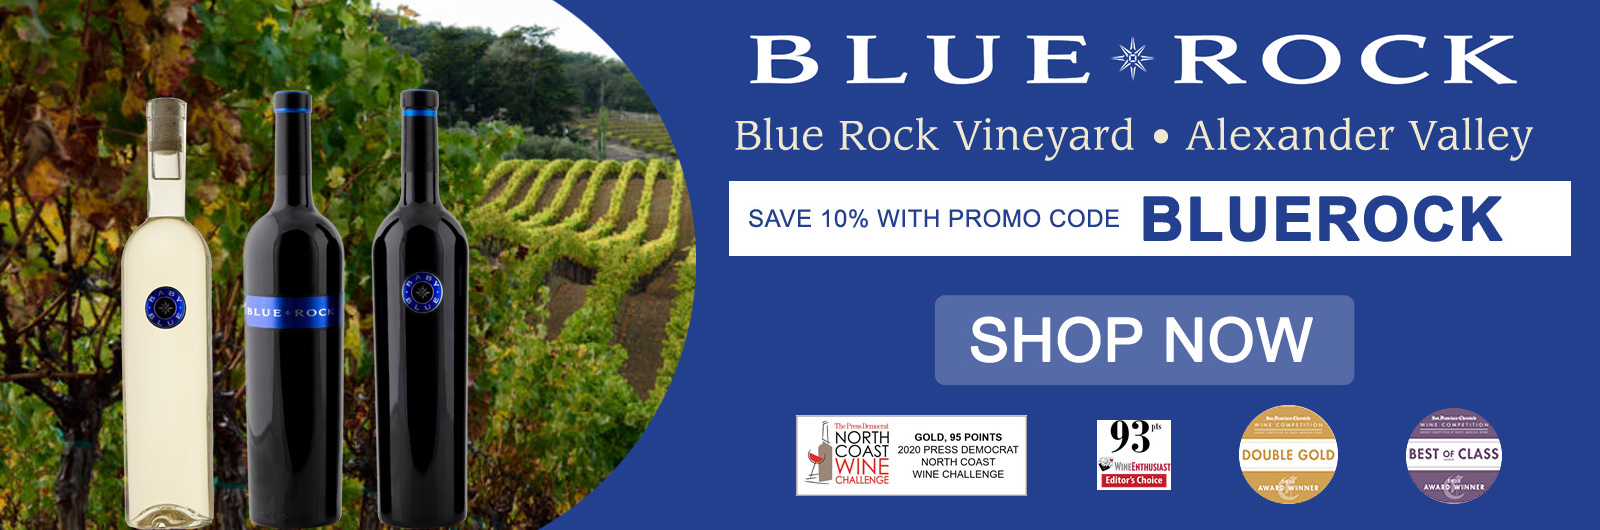 Blue Rock Vineyard - Banner Ad